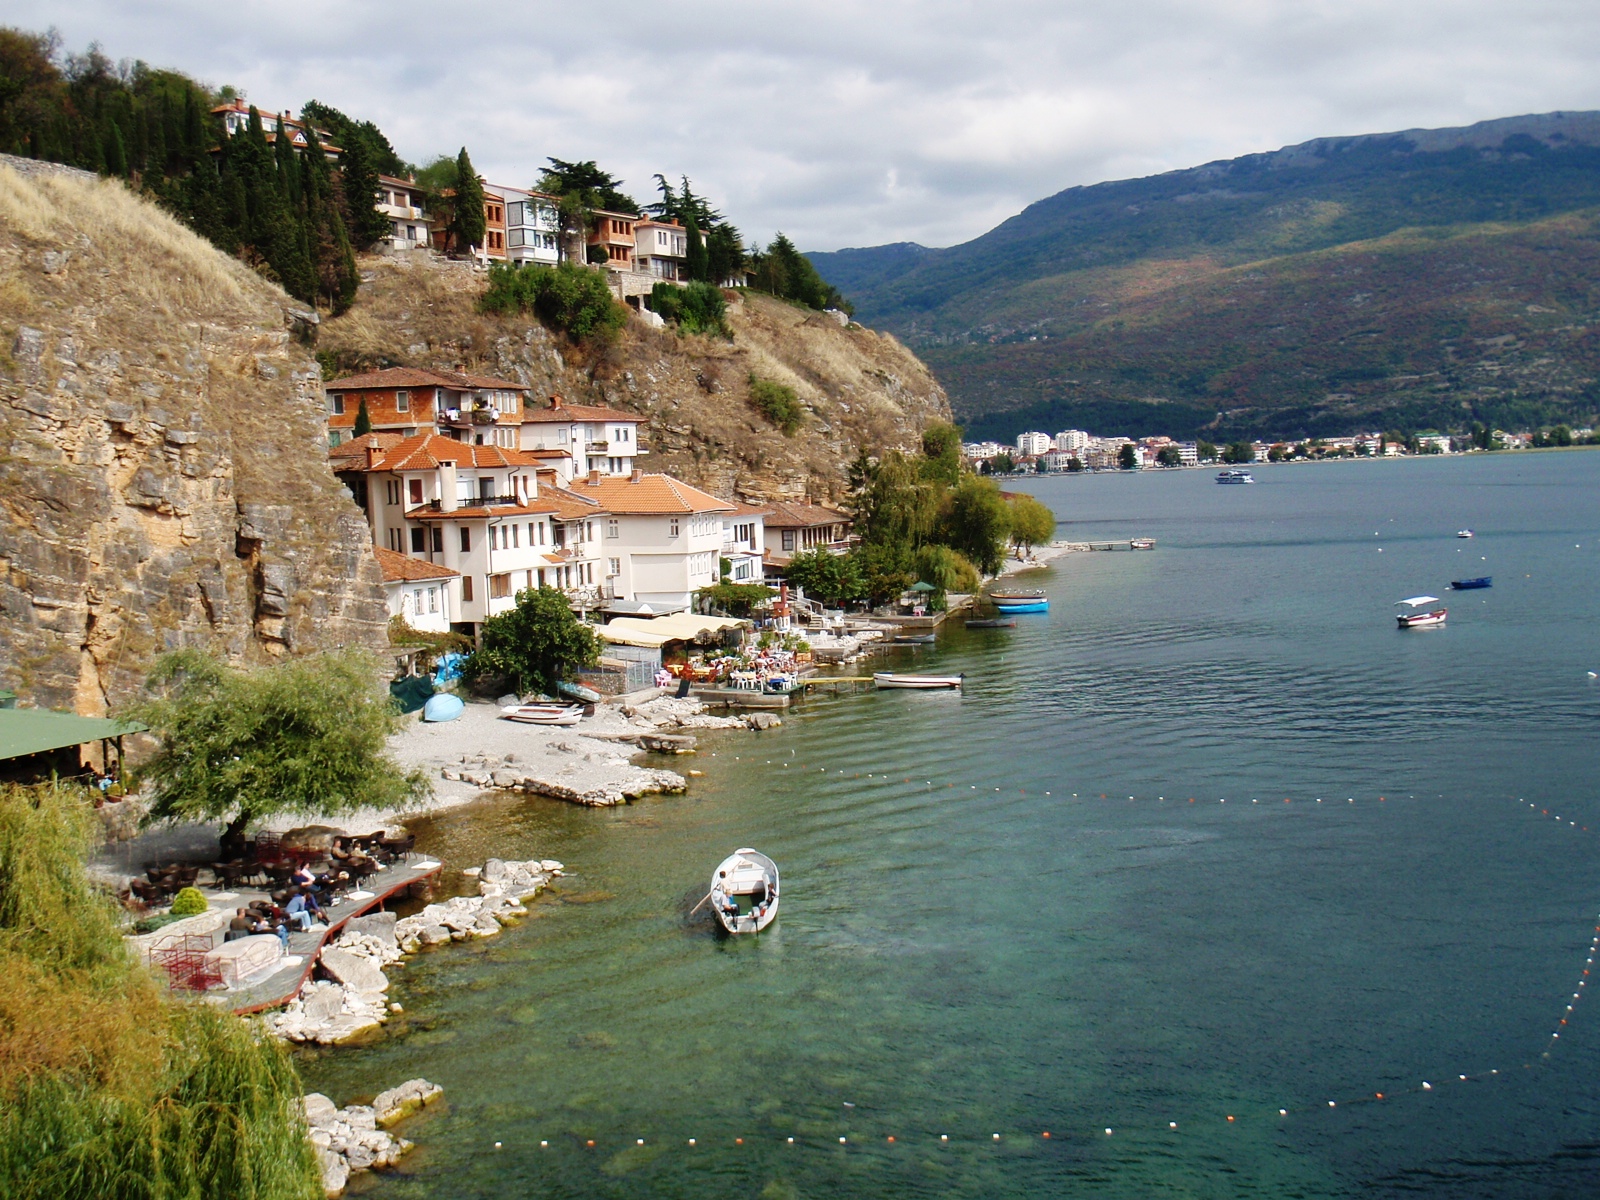 Beside Lk Ohrid - panoramio.jpg.